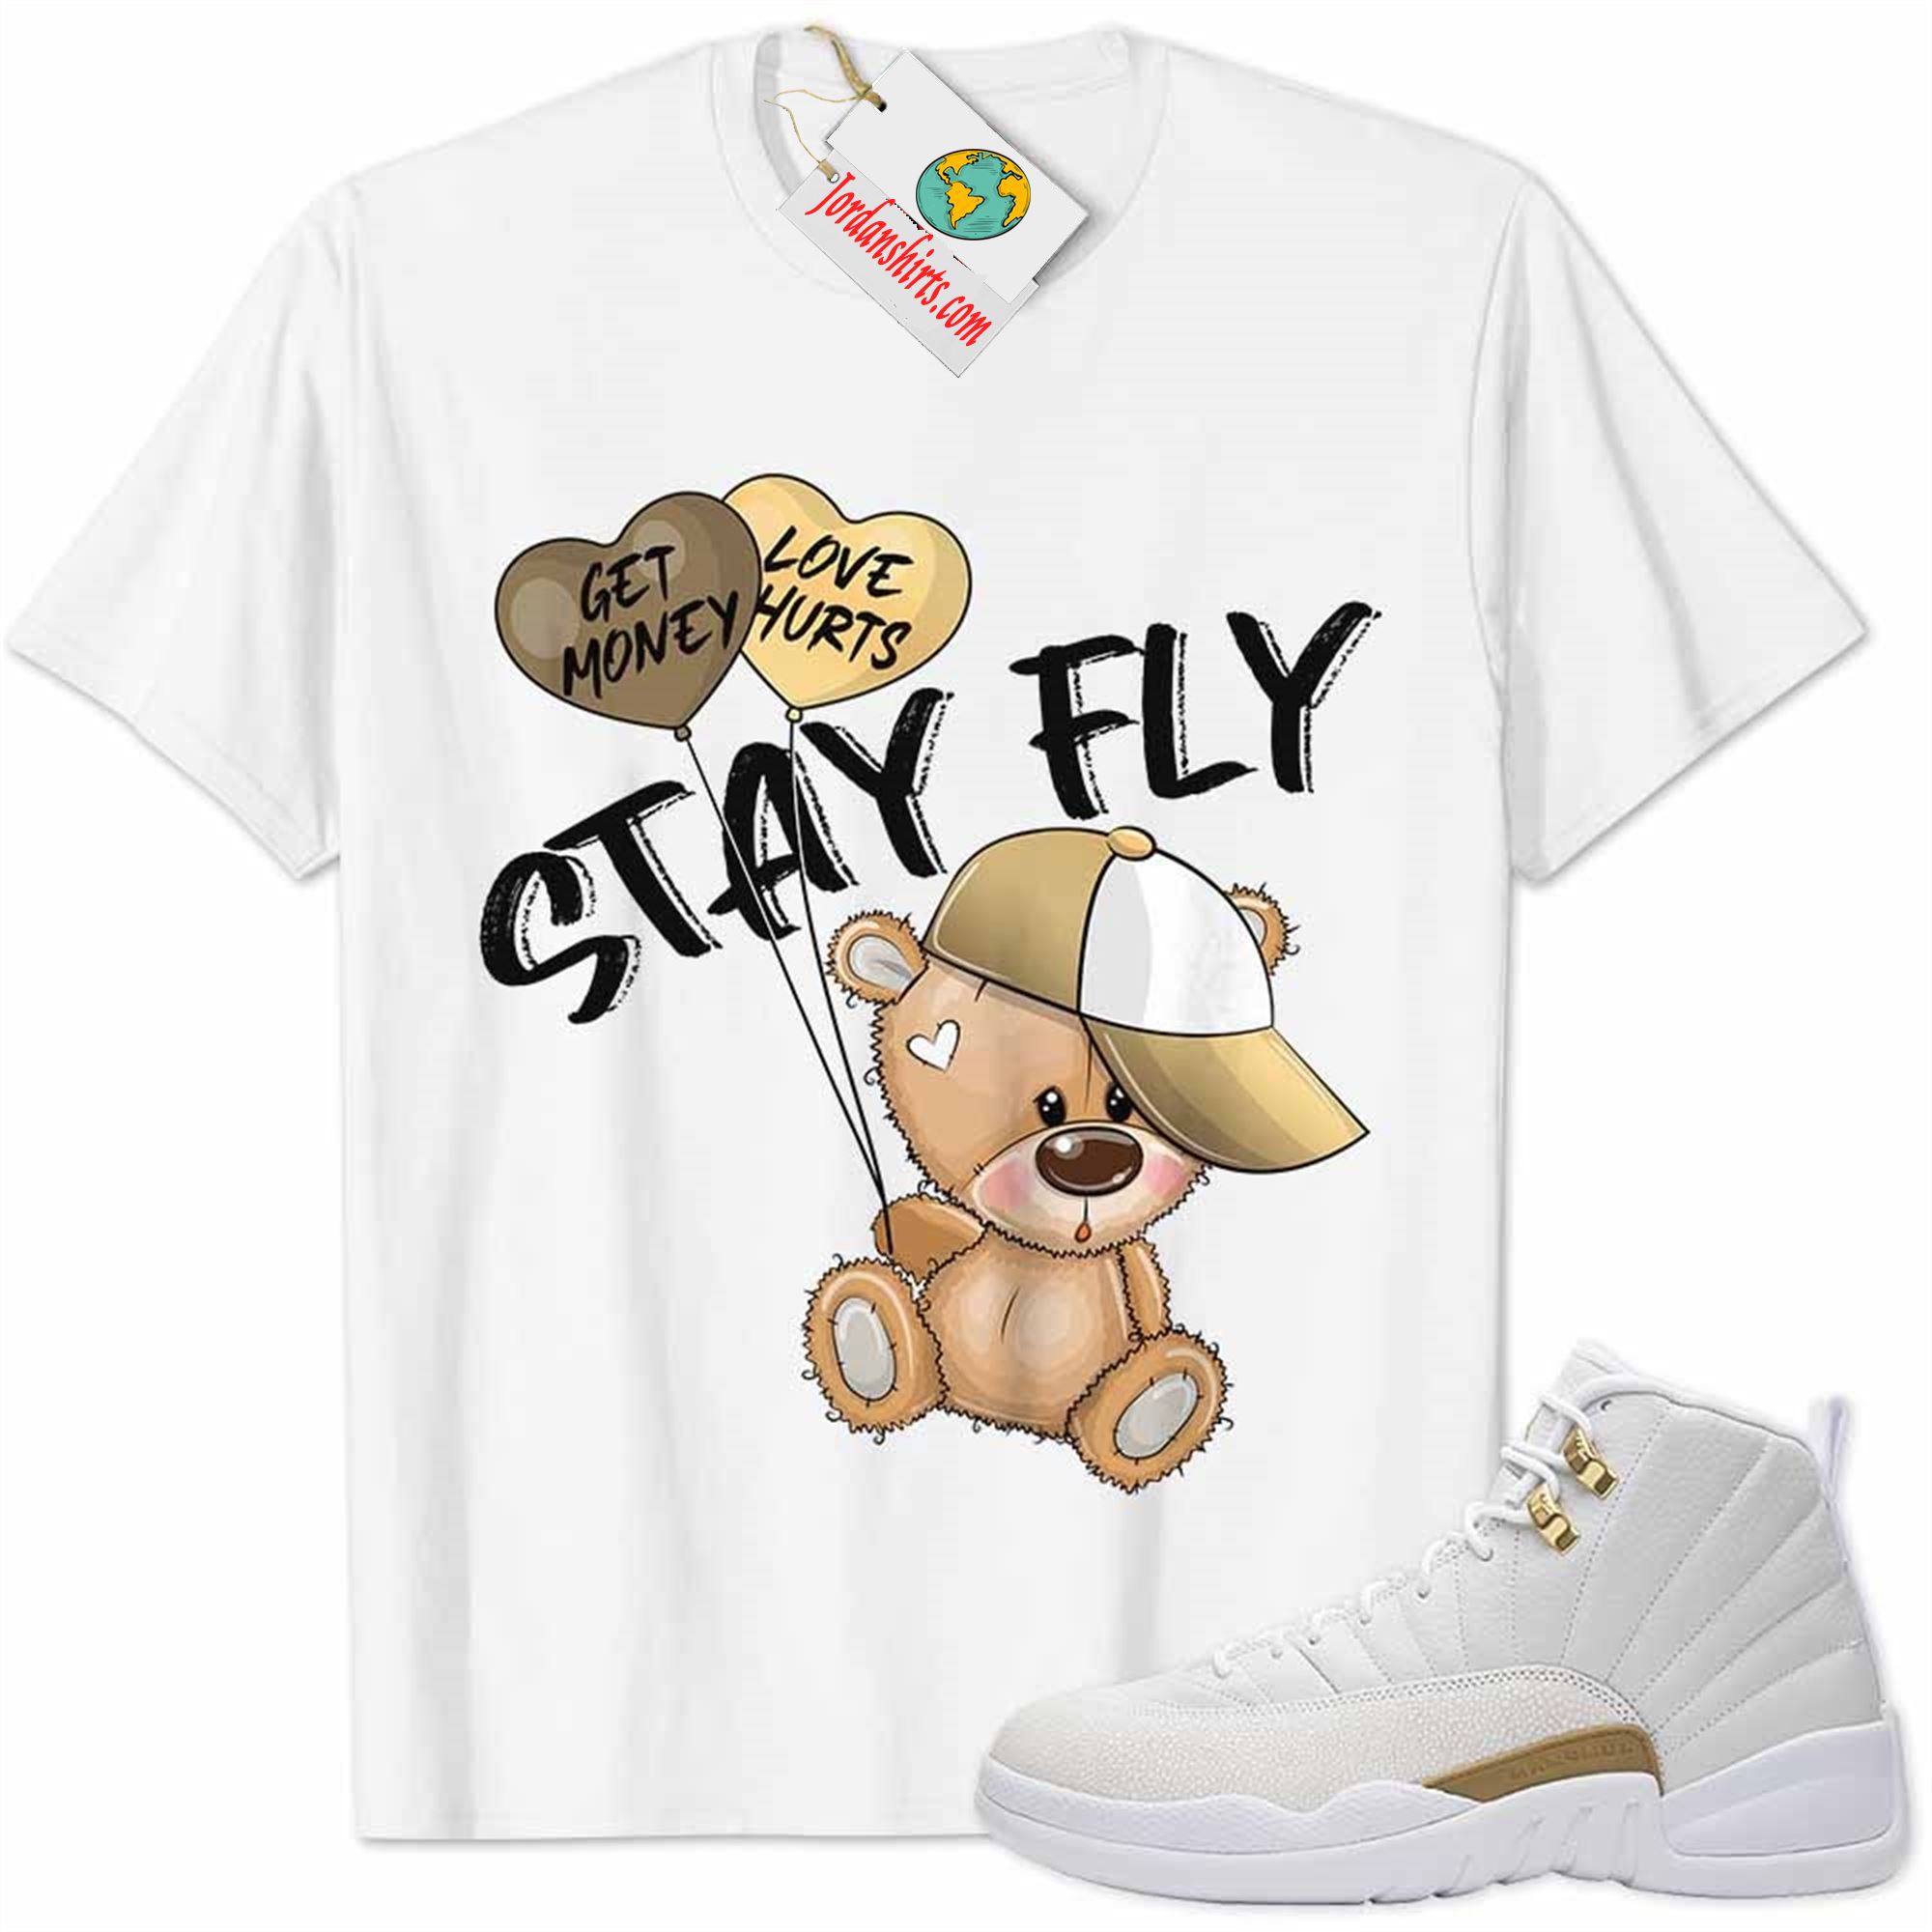 Jordan 12 Shirt, Ovo 12s Shirt Cute Teddy Bear Stay Fly Get Money White Full Size Up To 5xl